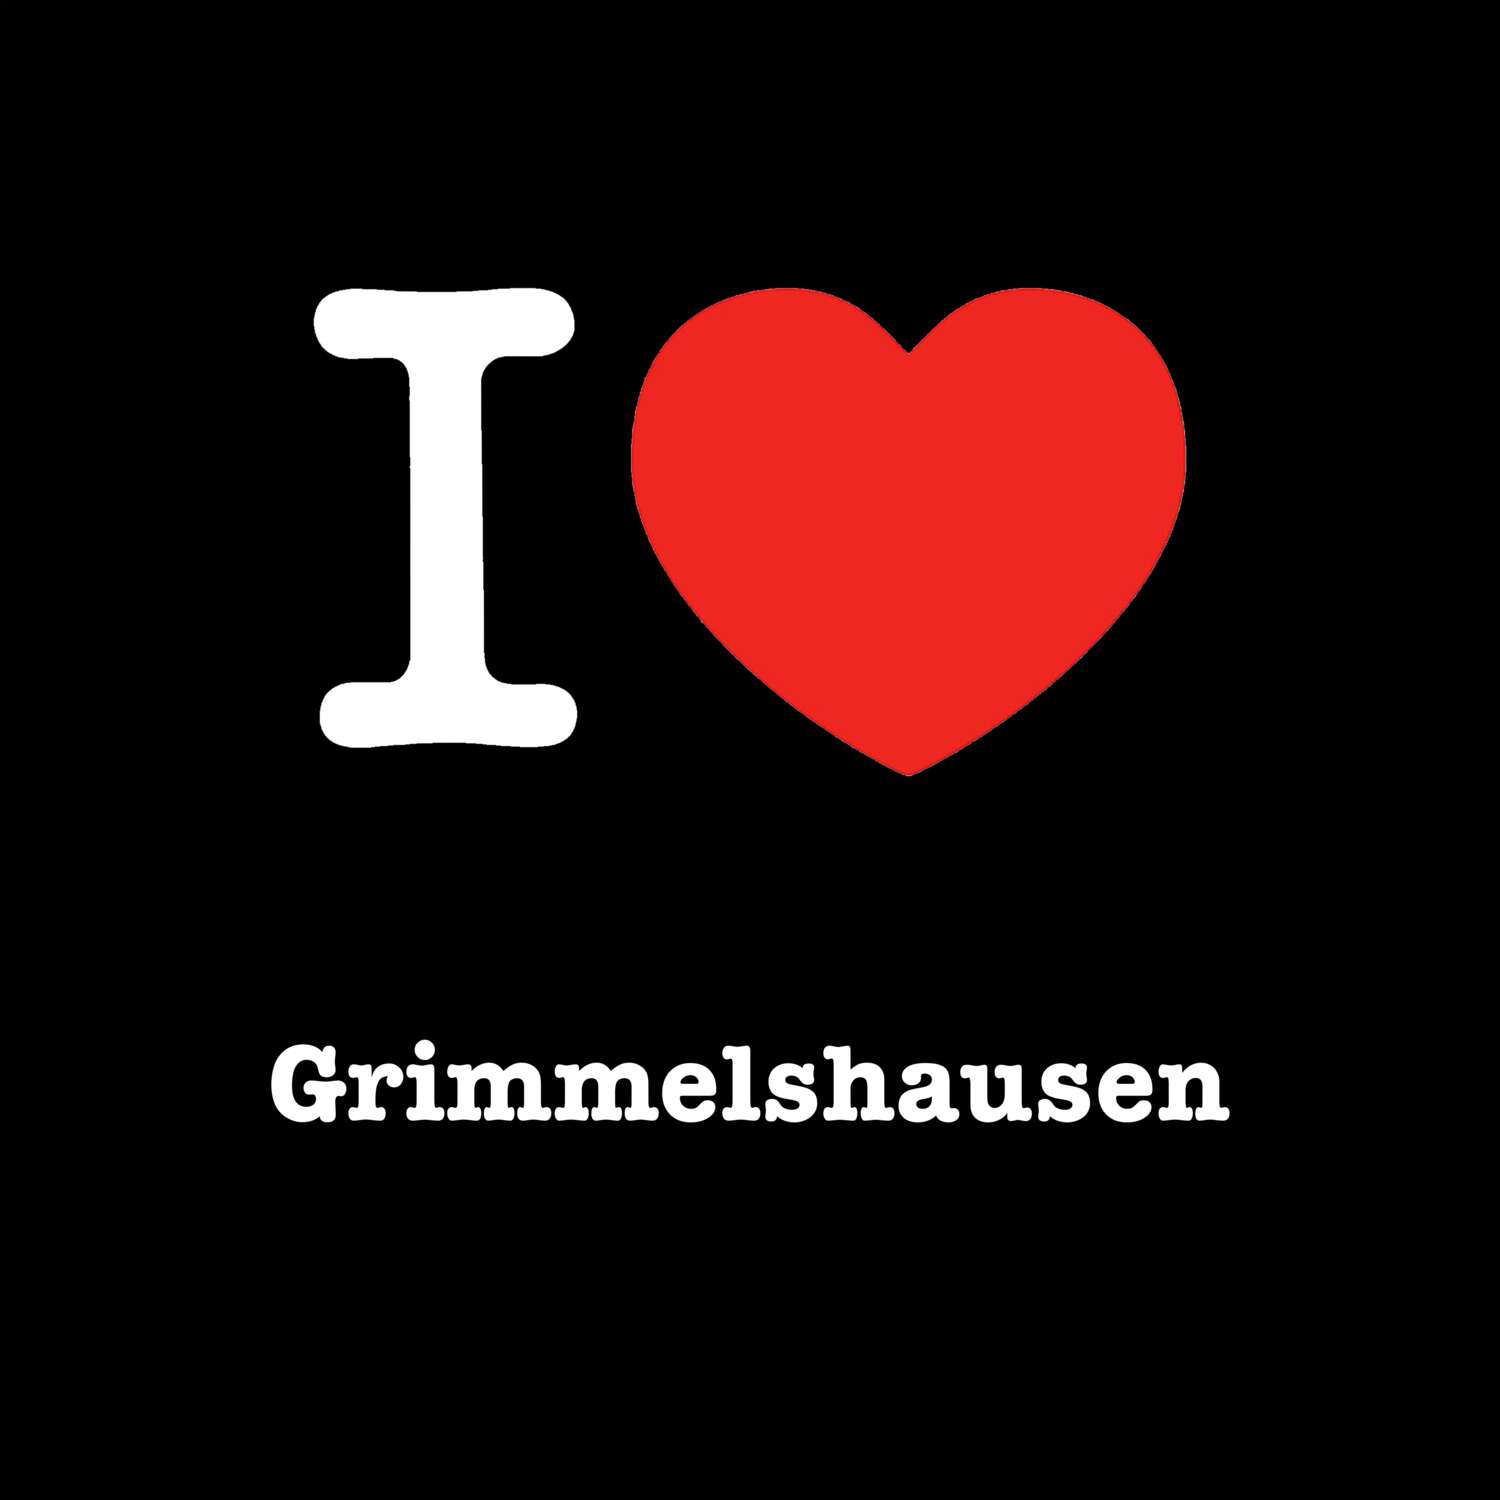 Grimmelshausen T-Shirt »I love«